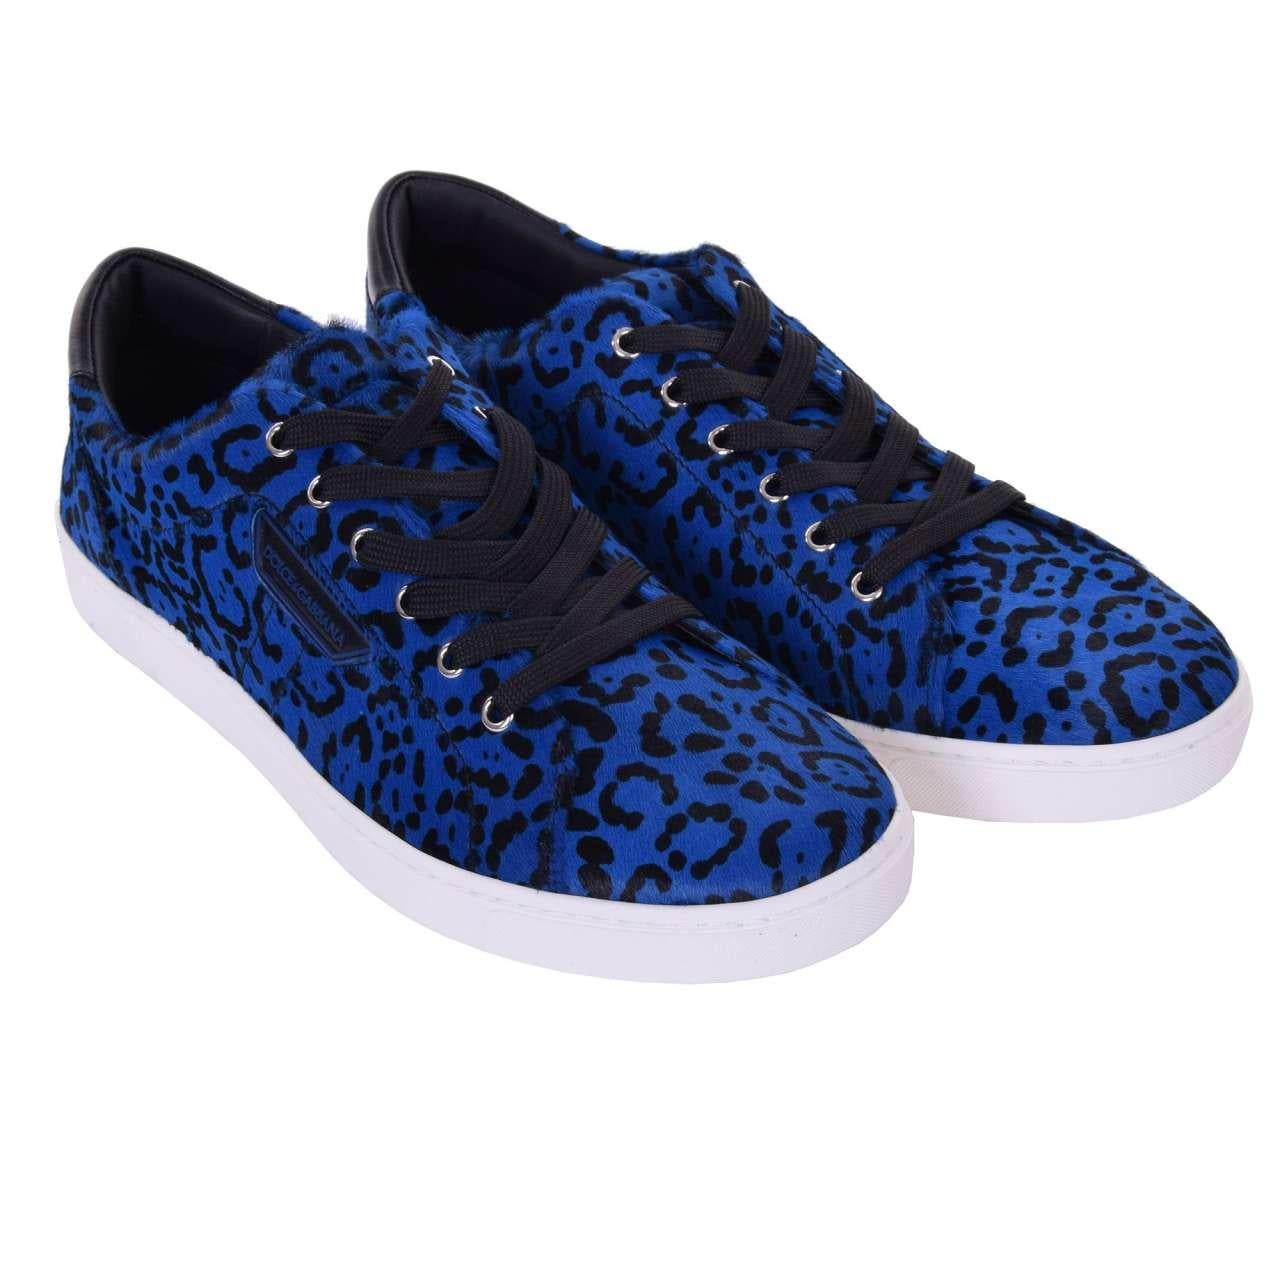 Dolce & Gabbana - Pony Fur Sneaker LONDON Leopard Blue EUR 42.5 In Excellent Condition For Sale In Erkrath, DE